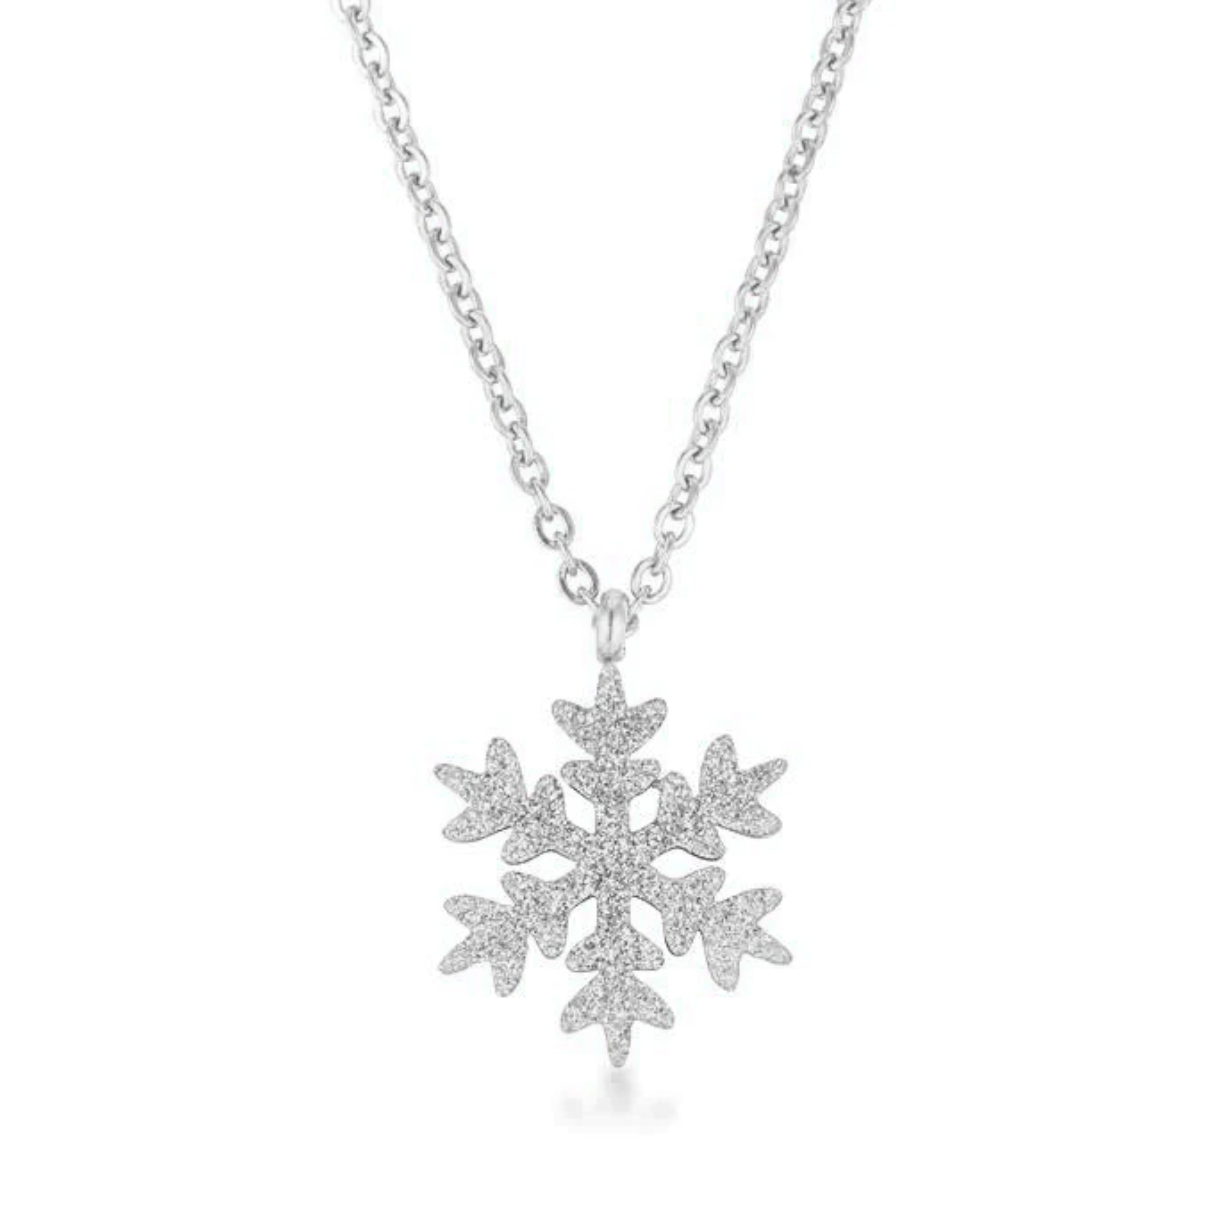 Snowflake Necklace Frozen